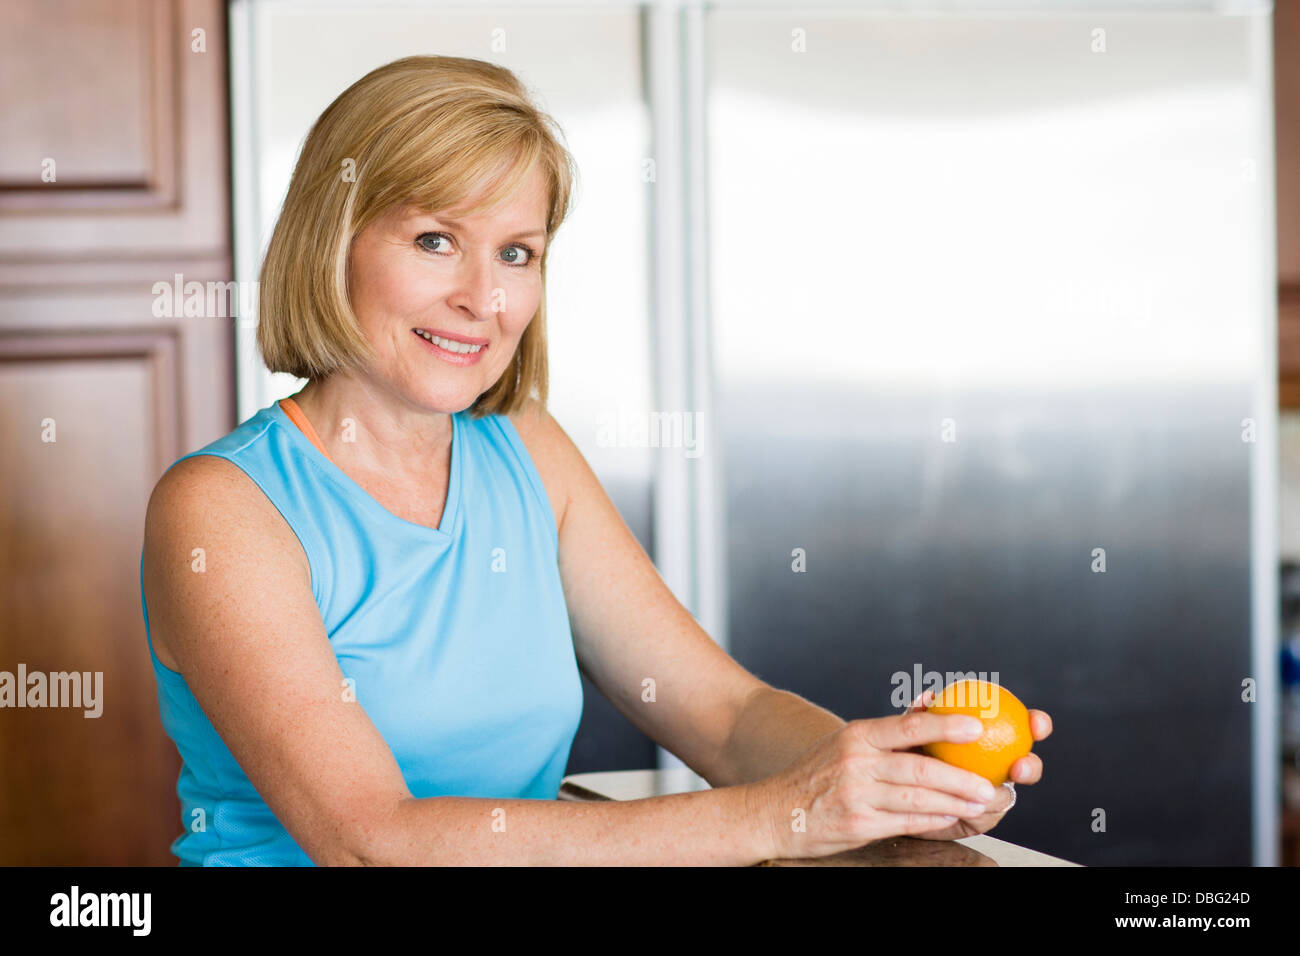 Caucasian woman peeling fruit in kitchen Stock Photo